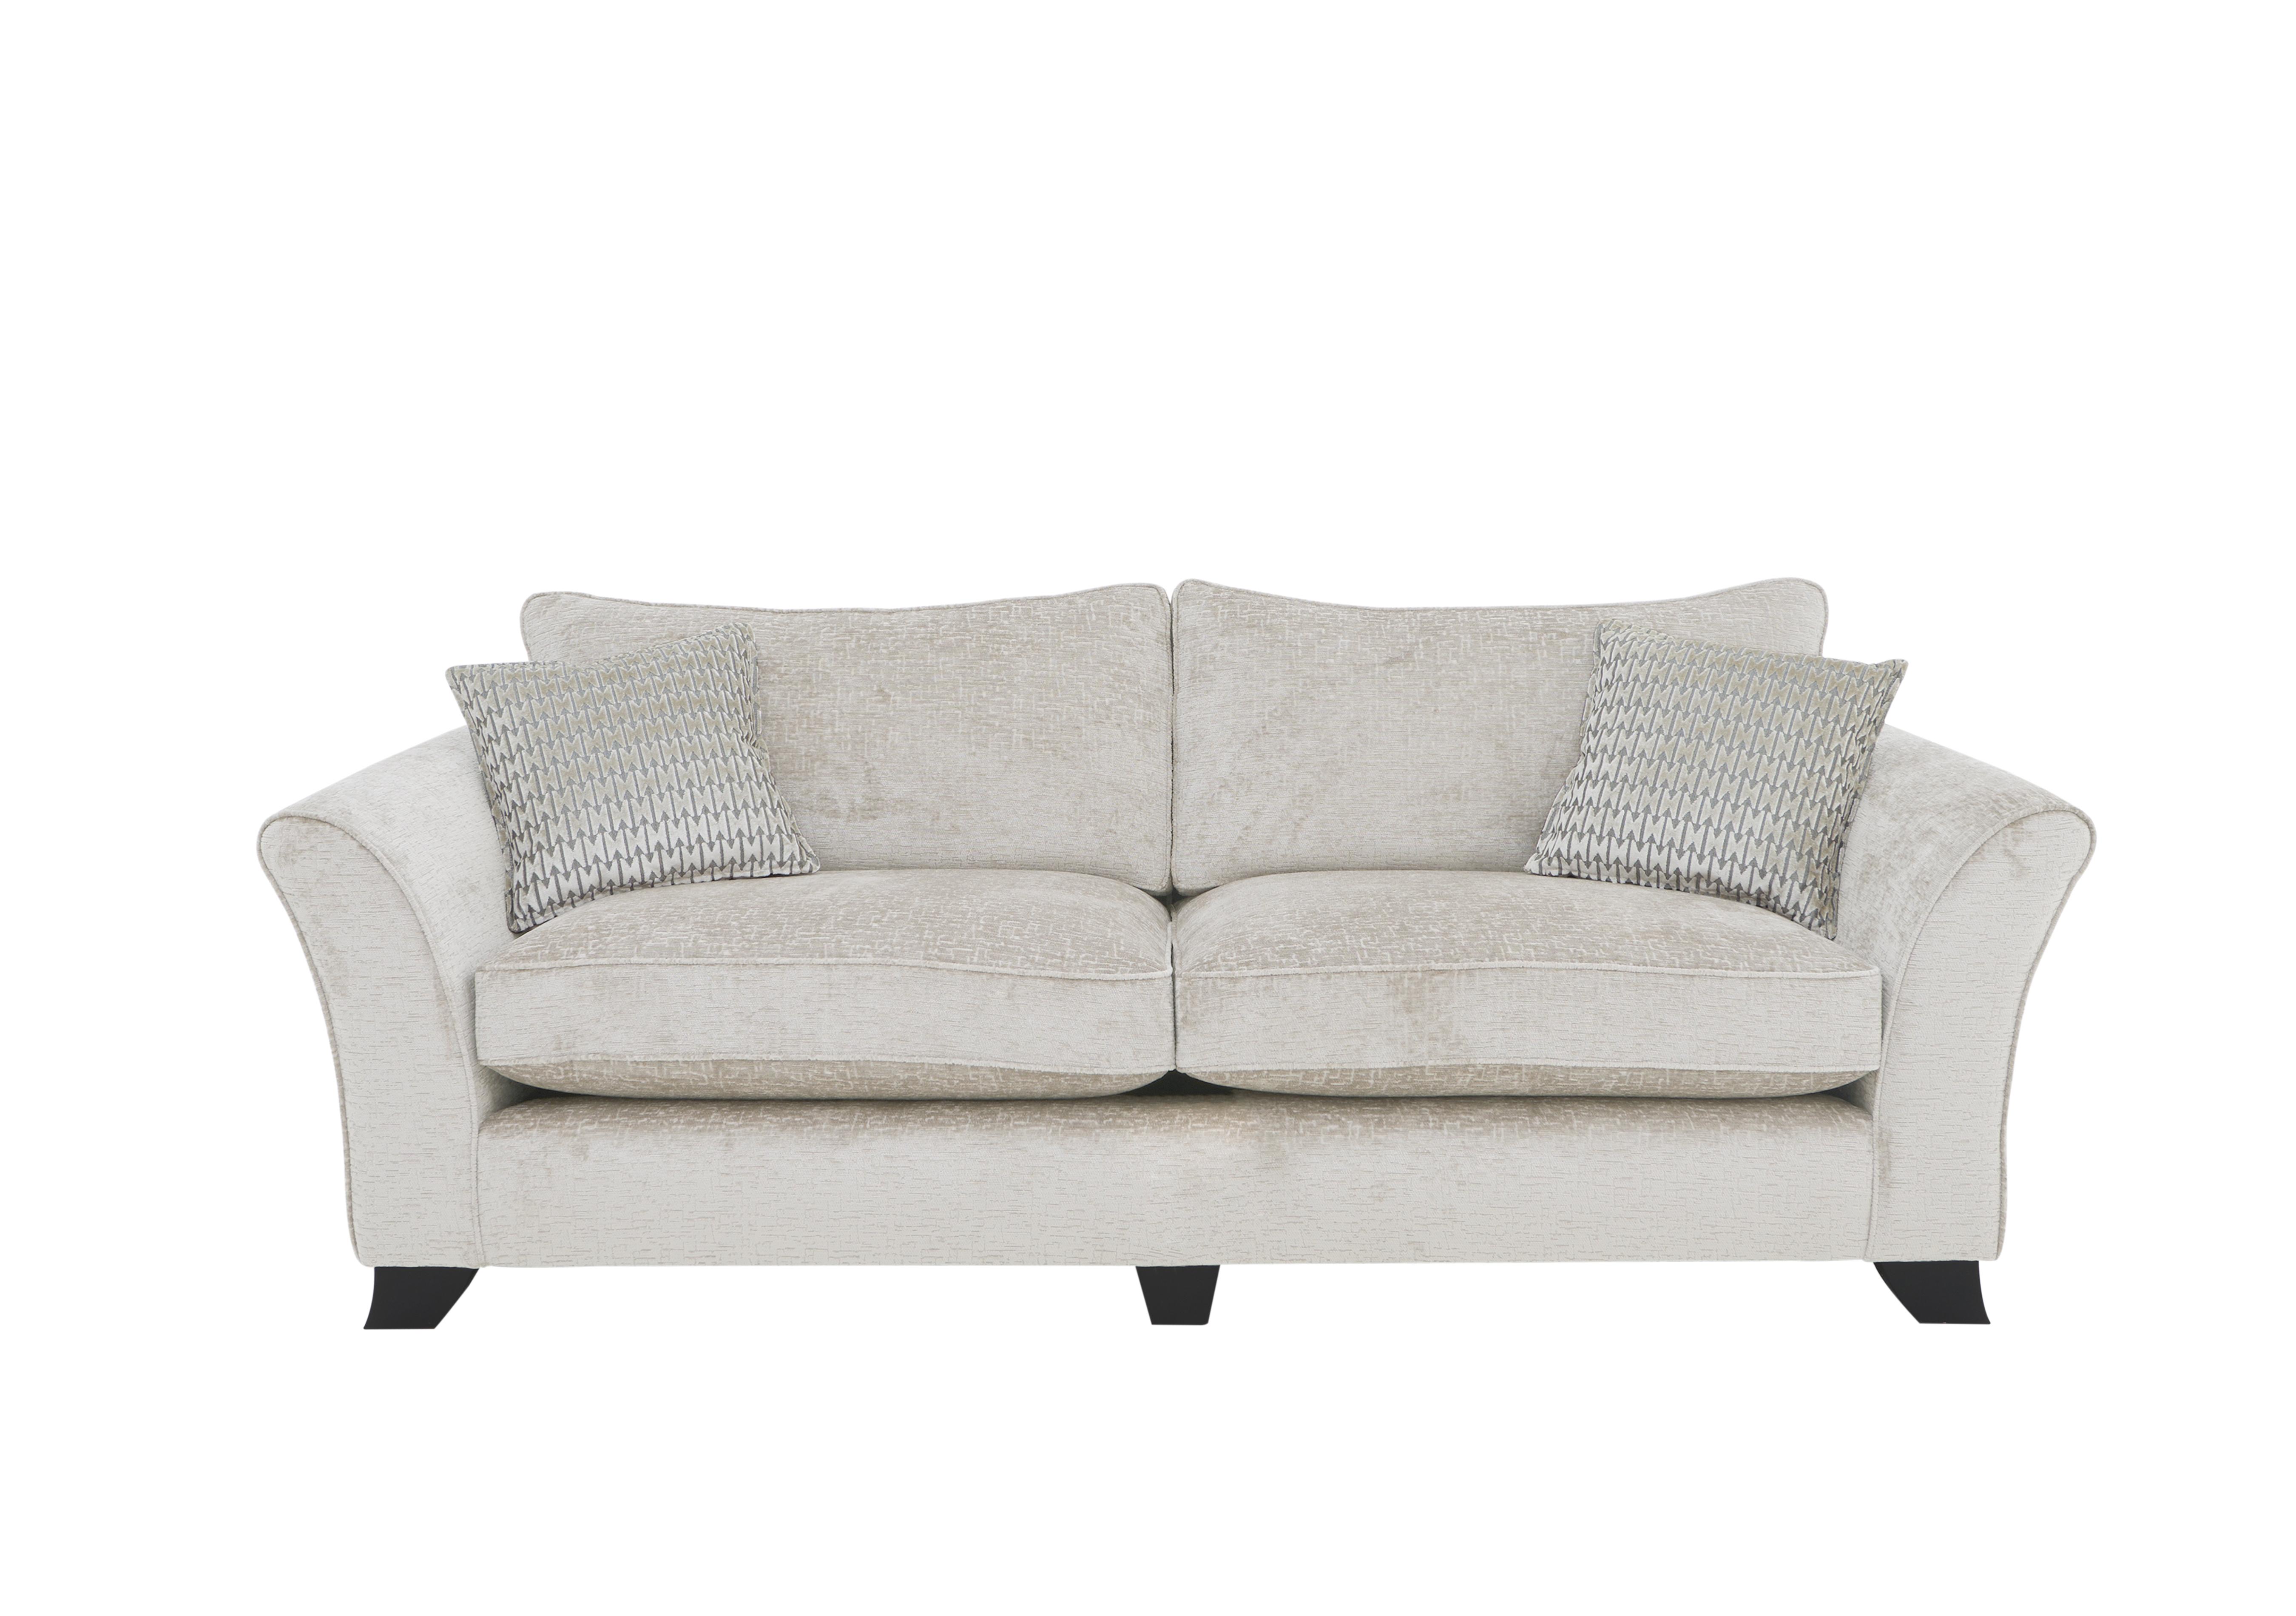 Sasha 4 Seater Classic Back Sofa in Alexandra Natural on Furniture Village